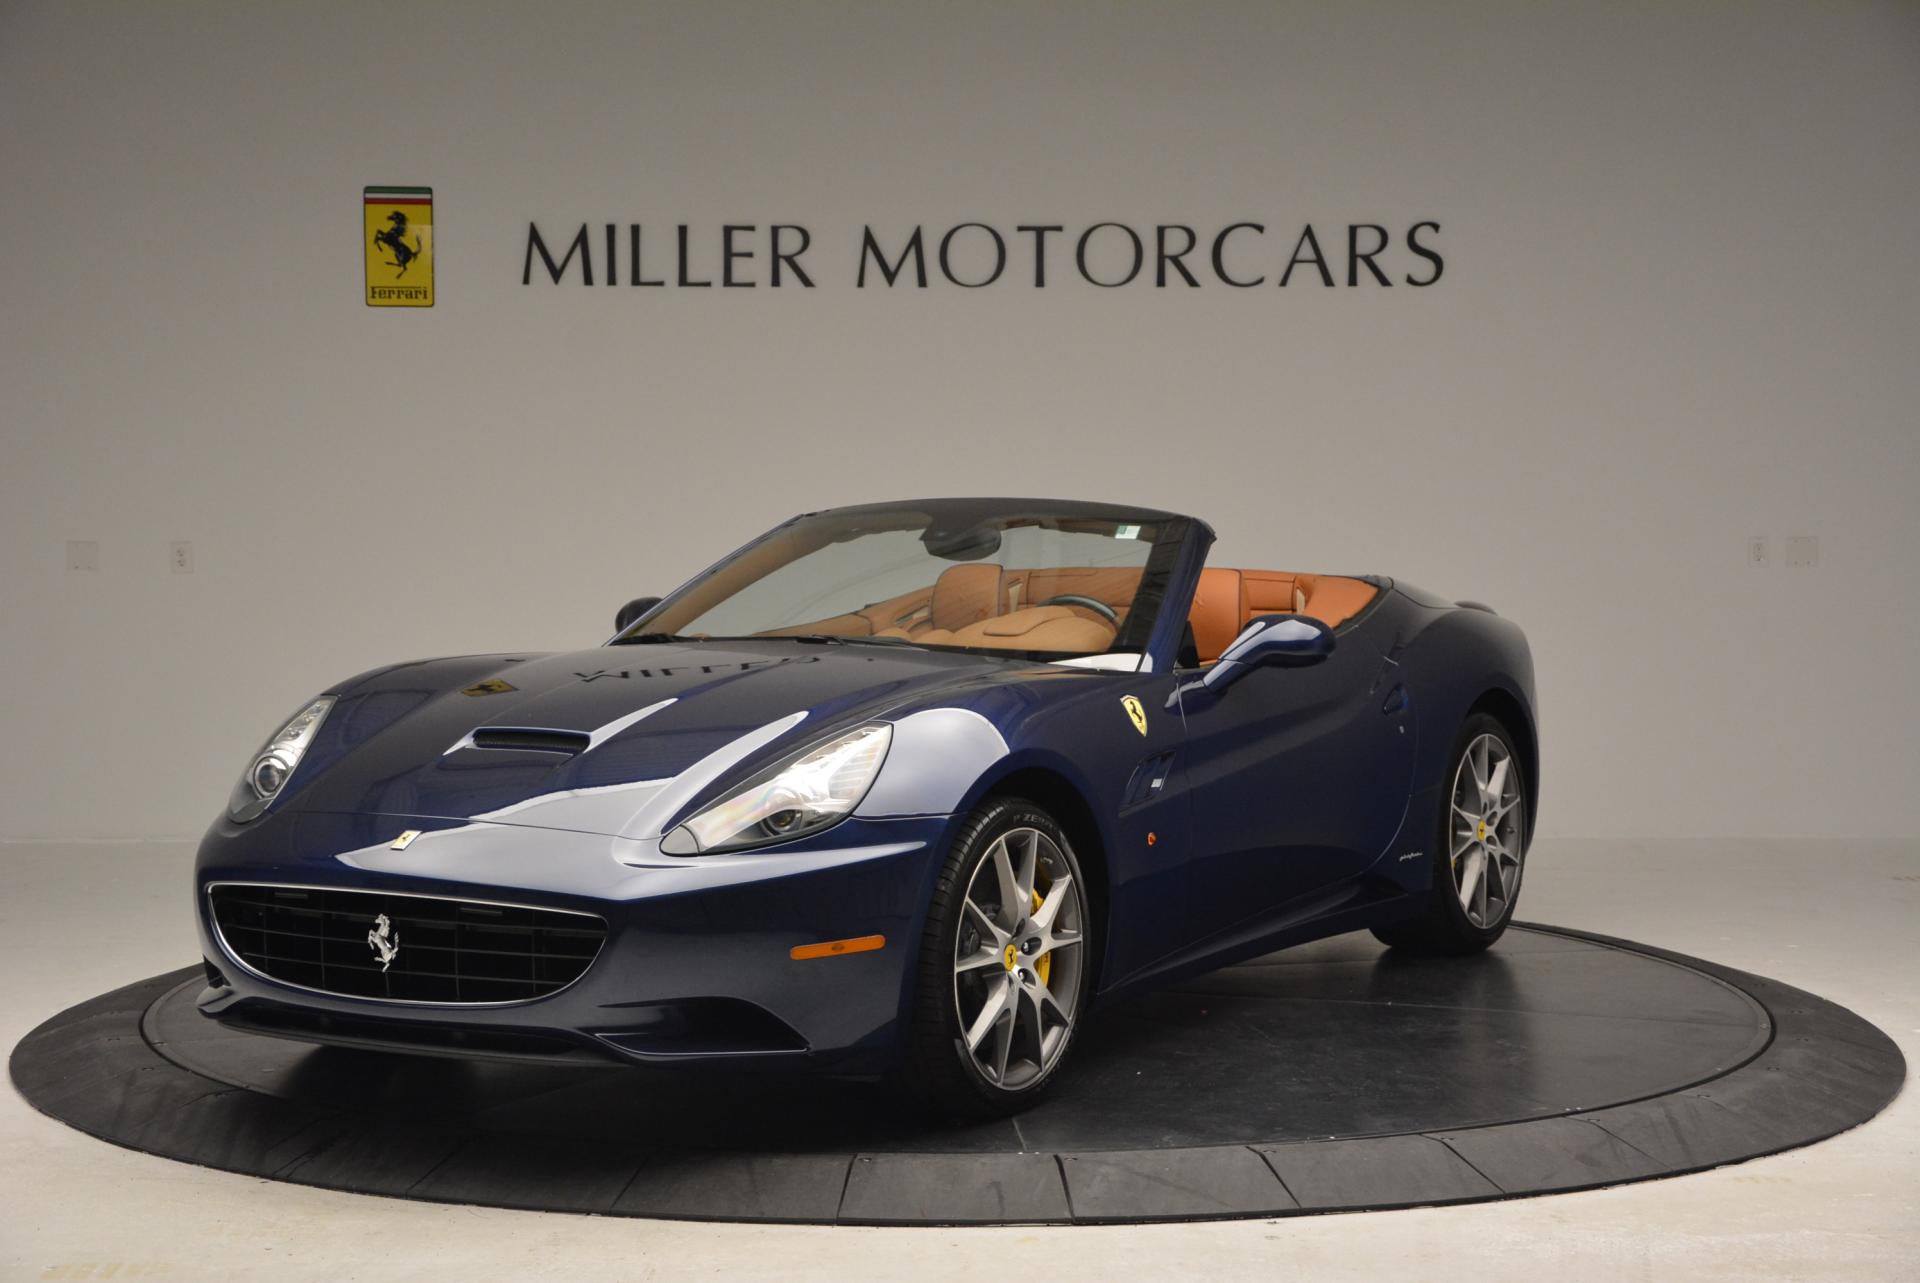 Used 2010 Ferrari California for sale Sold at Maserati of Greenwich in Greenwich CT 06830 1